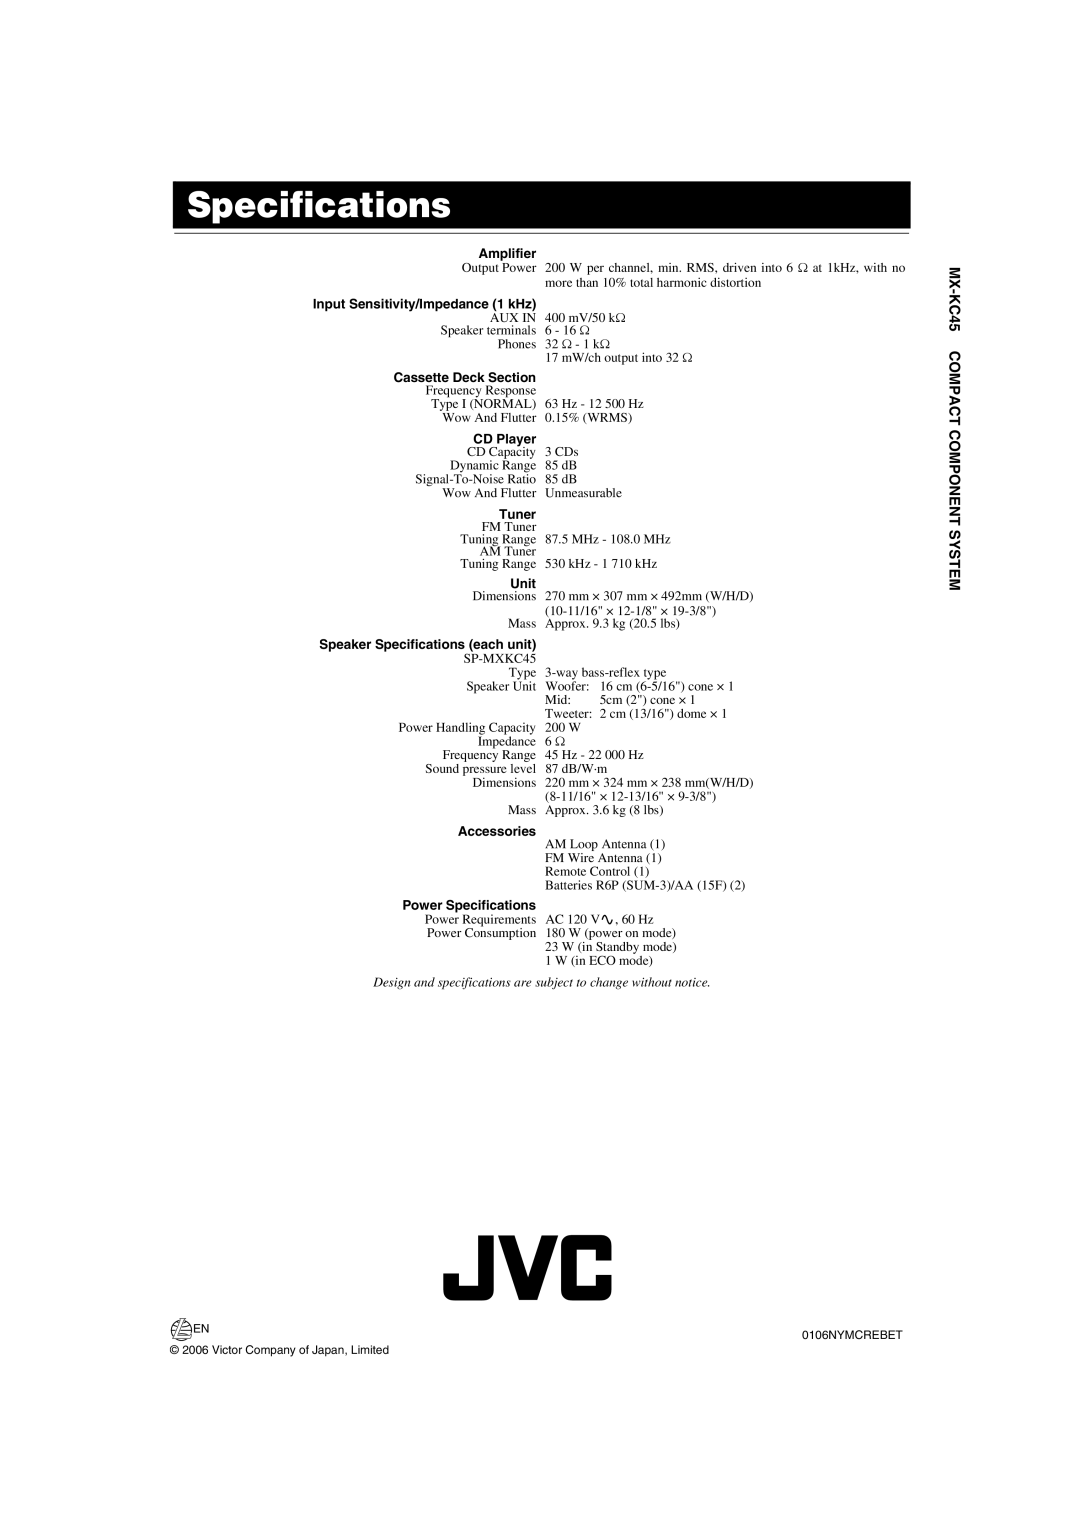 JVC Specifications, MX-KC45COMPACT COMPONENT SYSTEM, Amplifier, Input Sensitivity/Impedance 1 kHz, CD Player, Tuner 